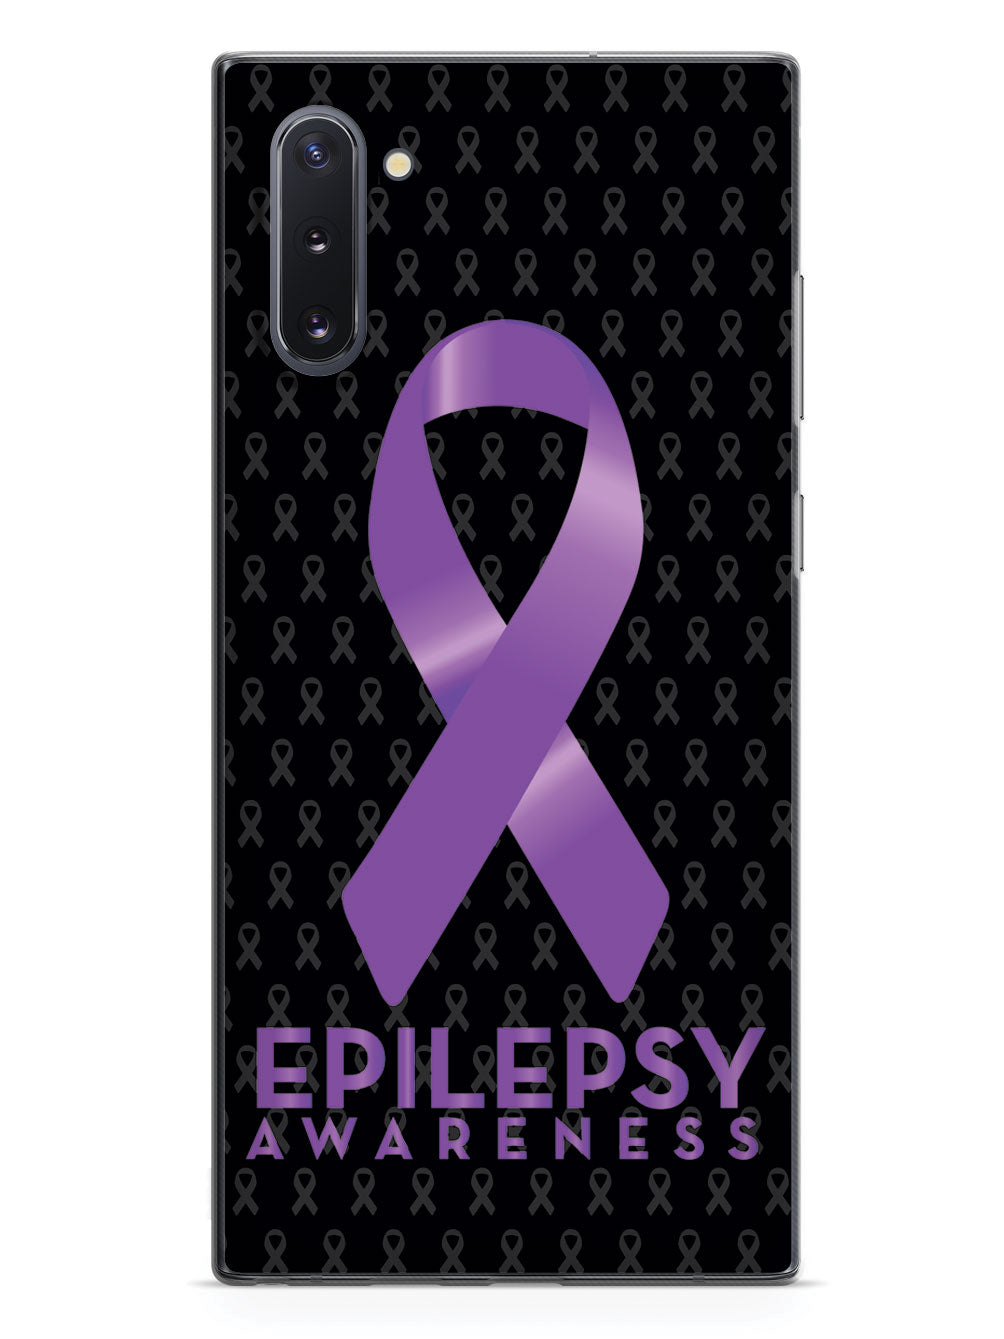 Epilepsy Awareness - Black Case